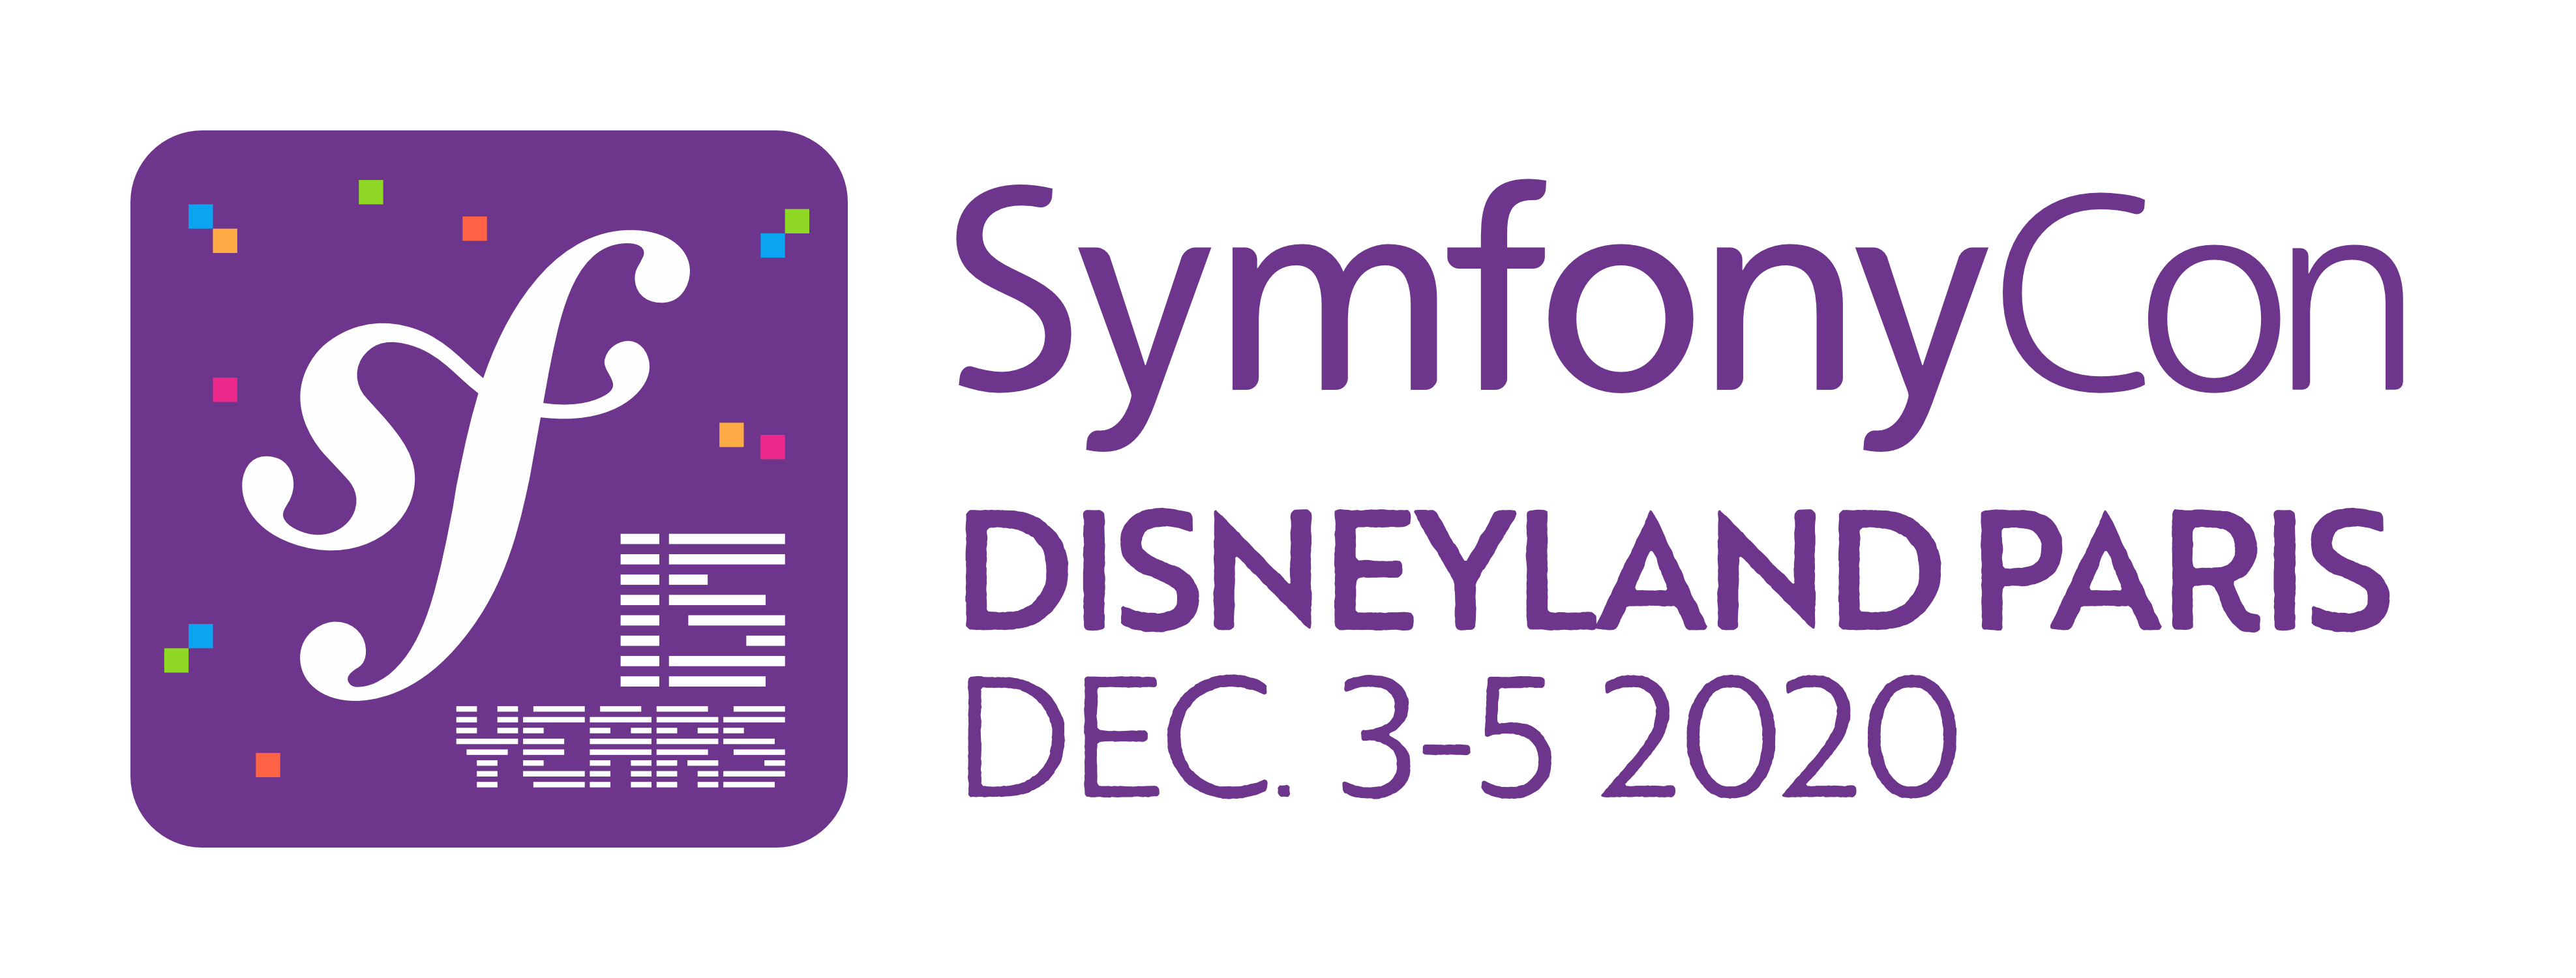 ob娱乐下载SymfonyCon 2020巴黎迪士尼乐园会议标志